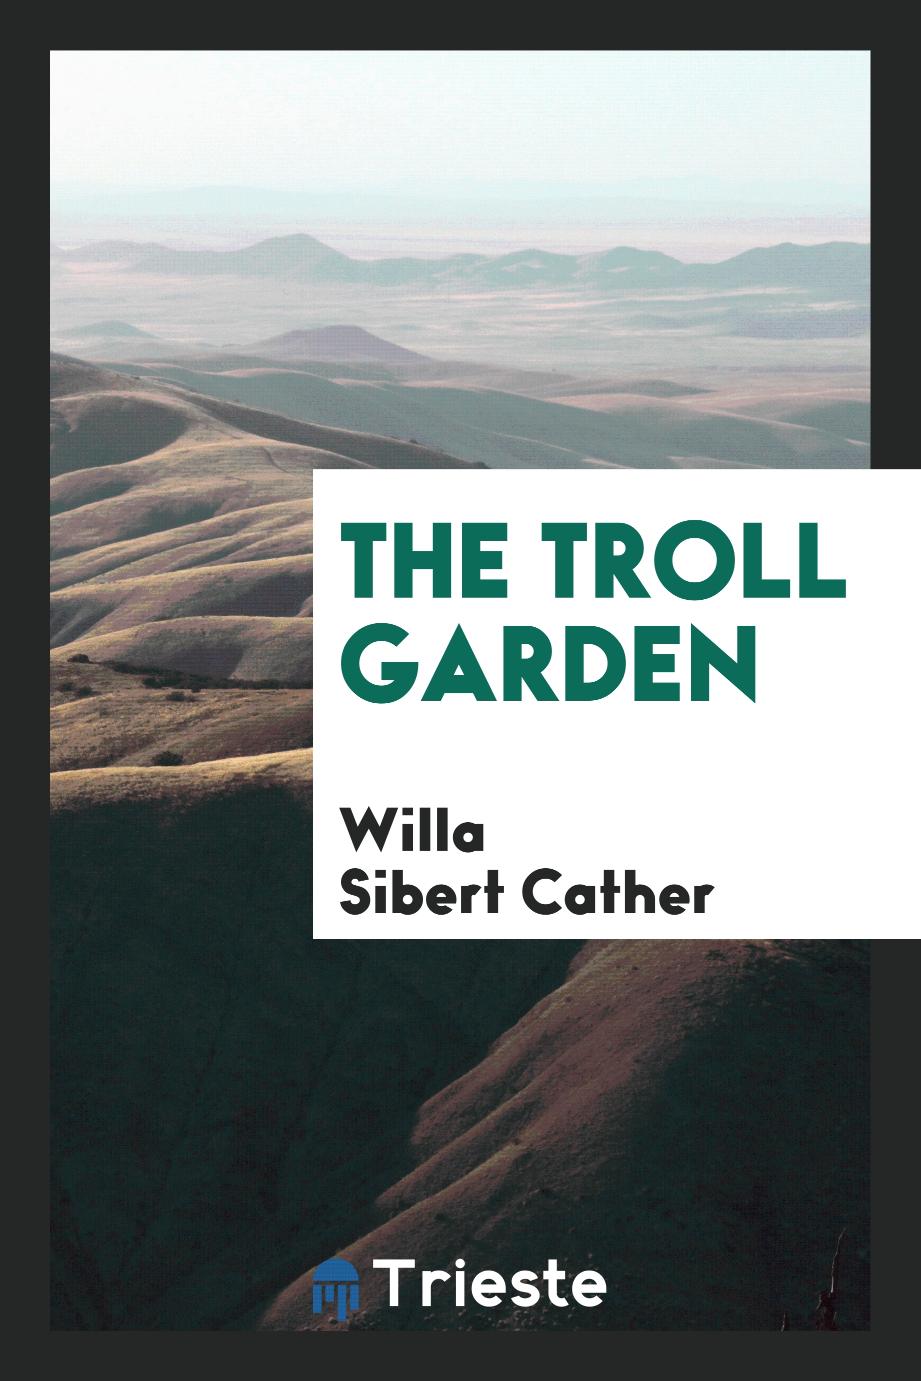 The troll garden